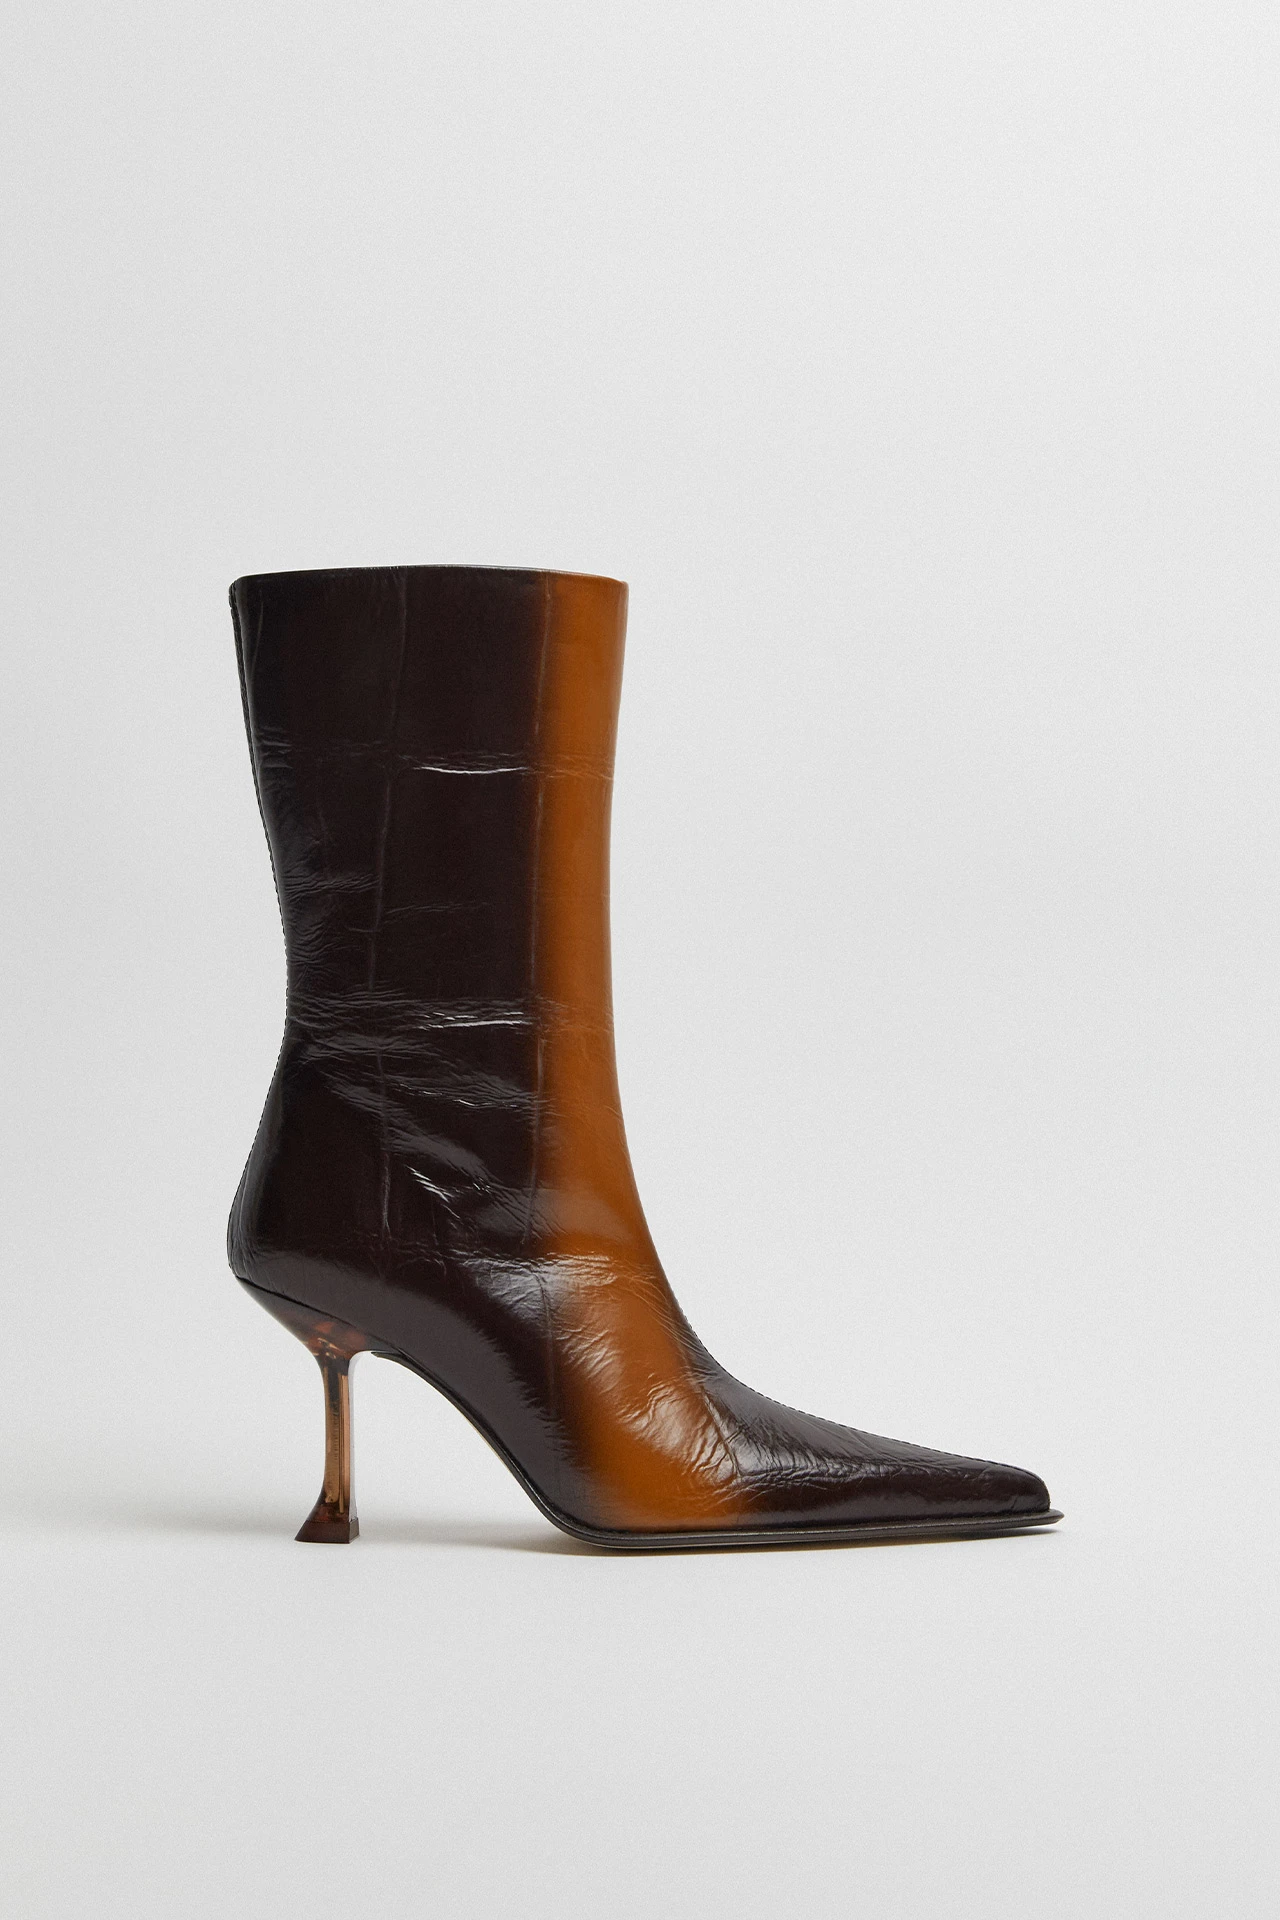 Miista-marcela-brown-boots-01